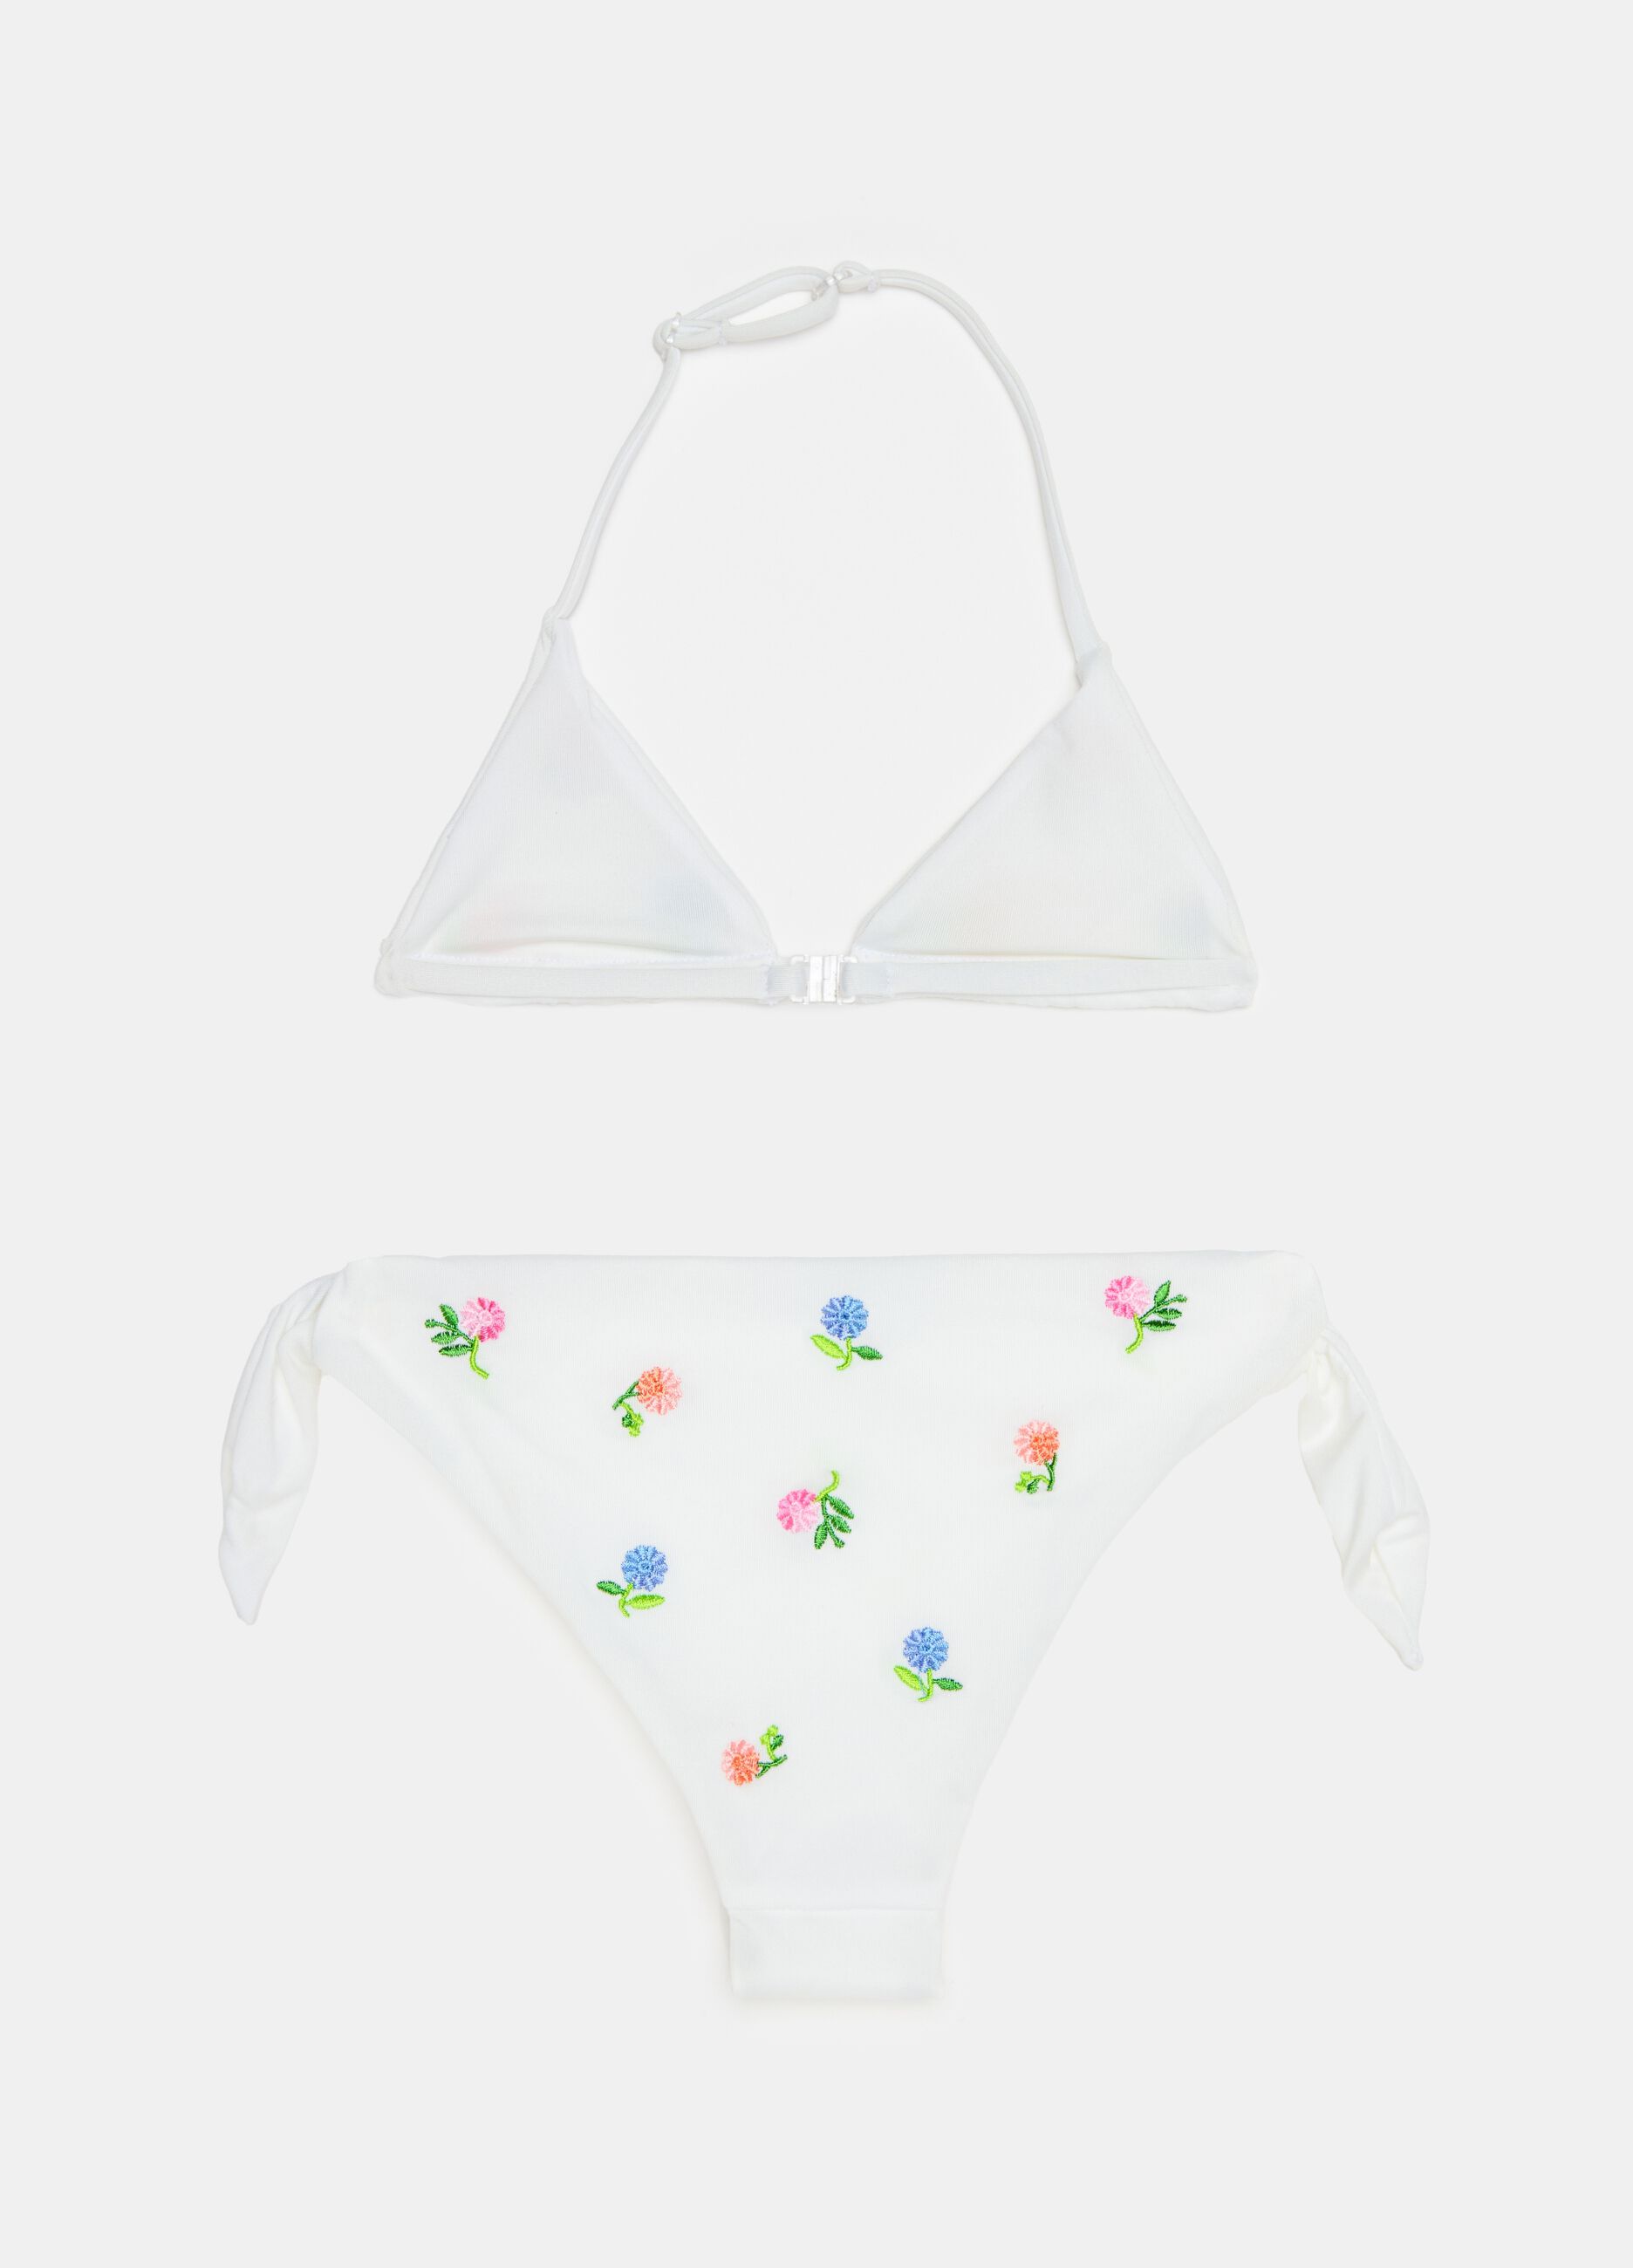 Bikini with small flowers embroidery